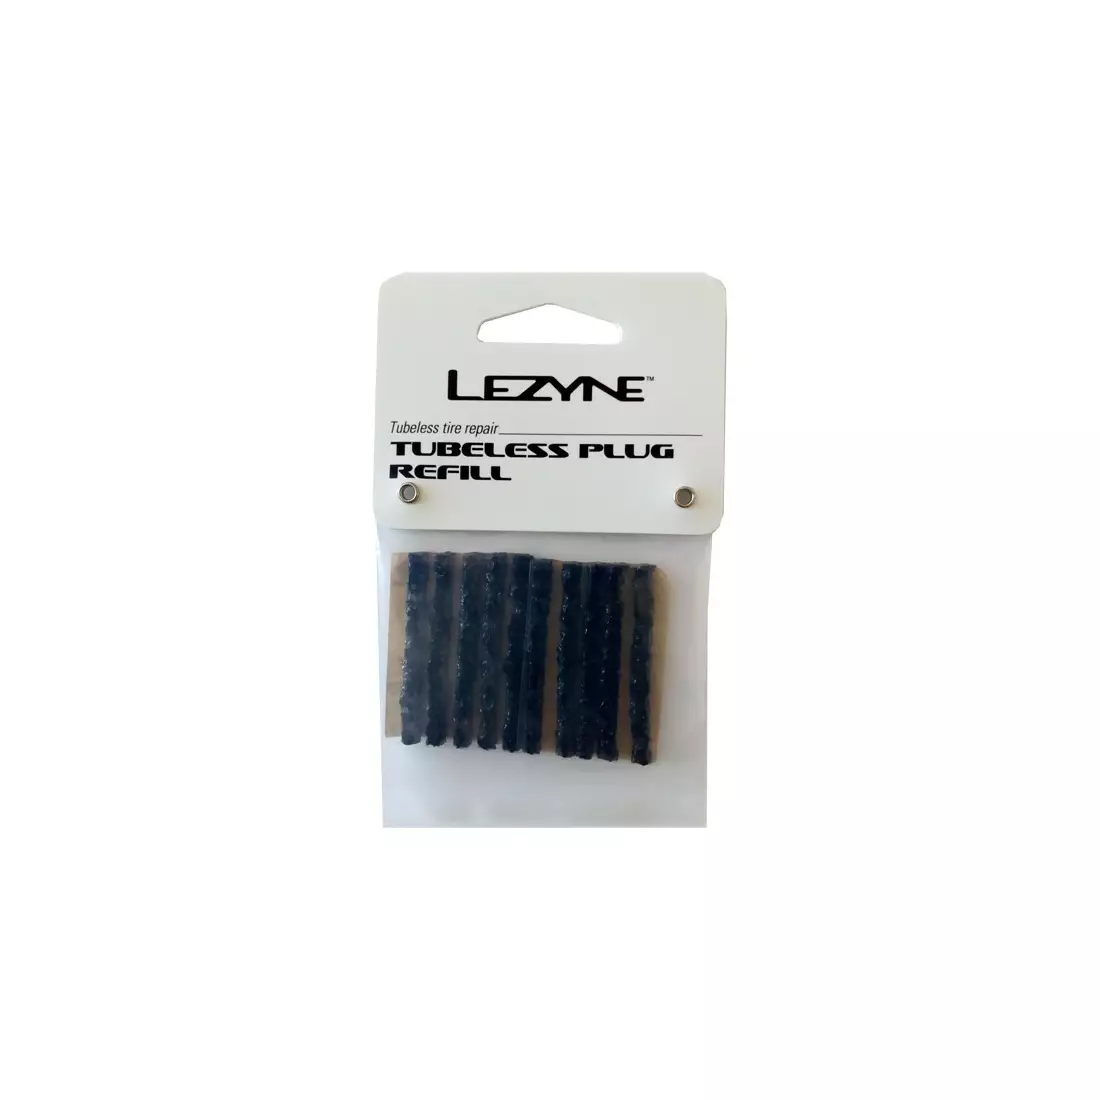 LEZYNE elastic for tyre tubeless repair tubeless plug refill-10 (10 cartridges) LZN-1-PK-PTBLS-V104-10